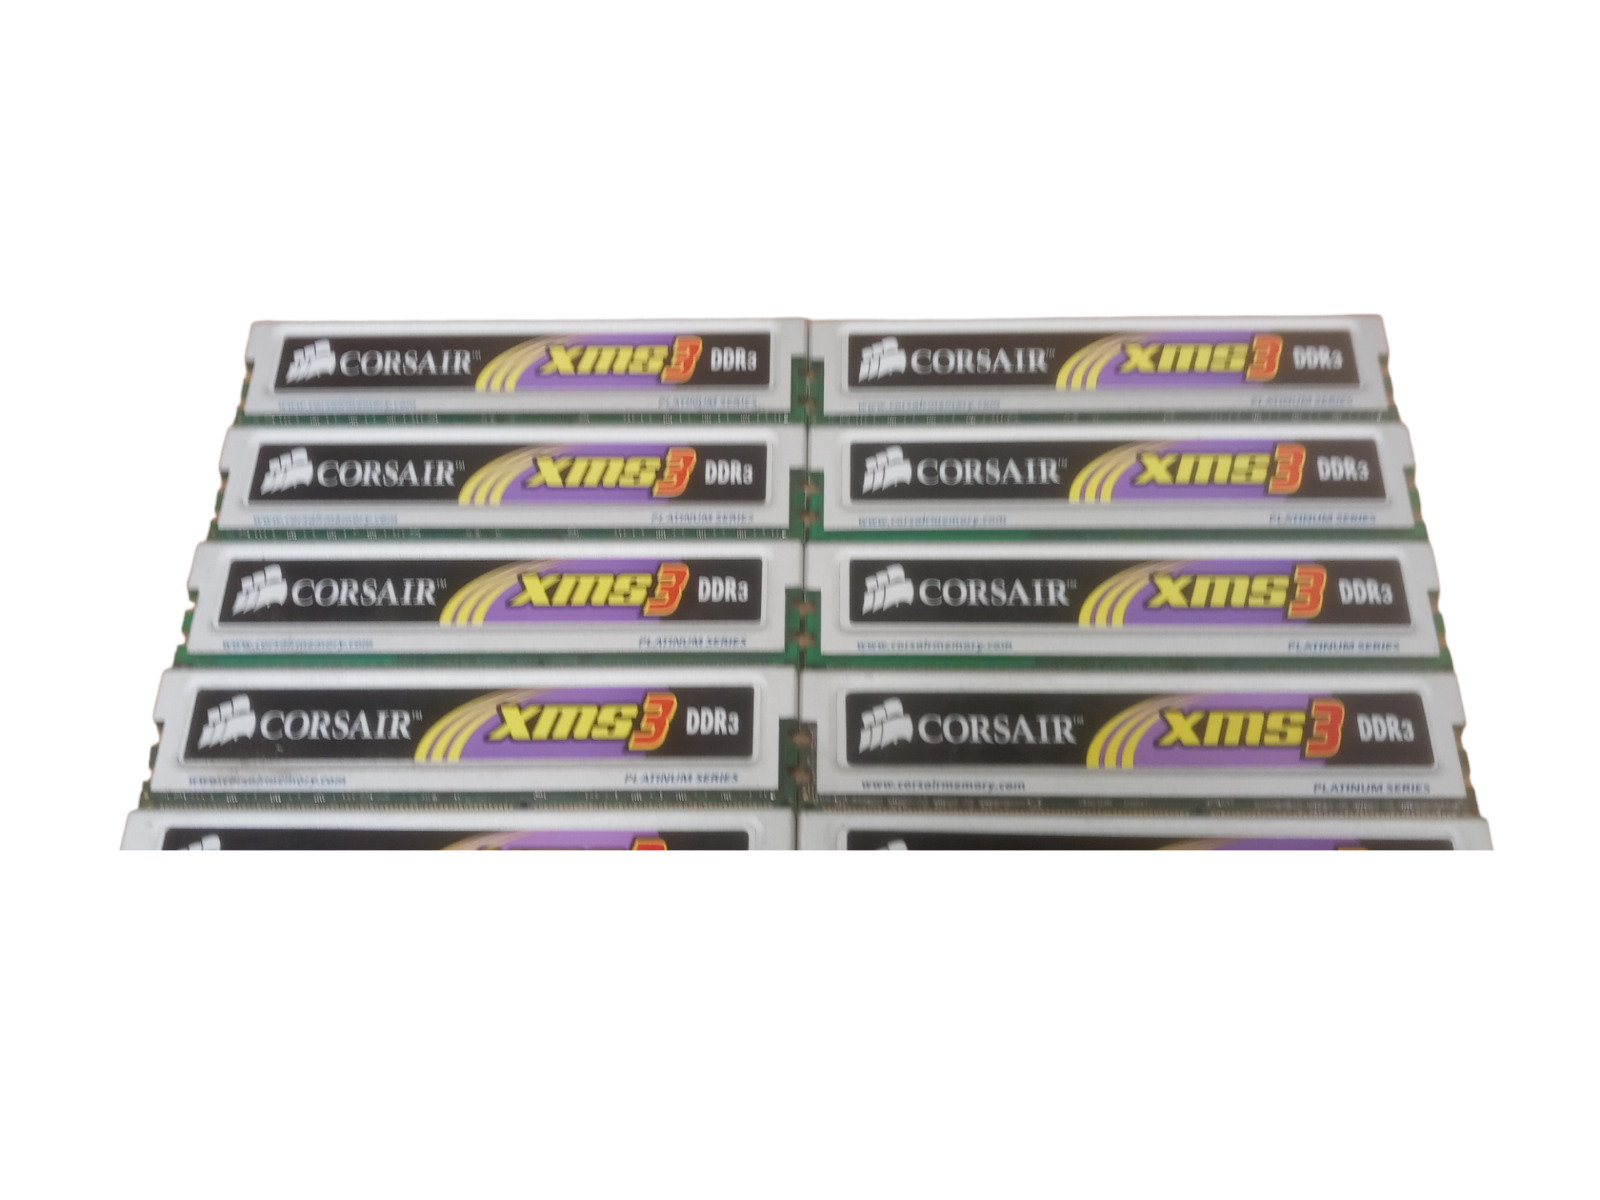 Mixed Lot Of 10 Corsair 20GB (10x2GB) DDR3 PC3-10600 Desktop Memory Ram Tested